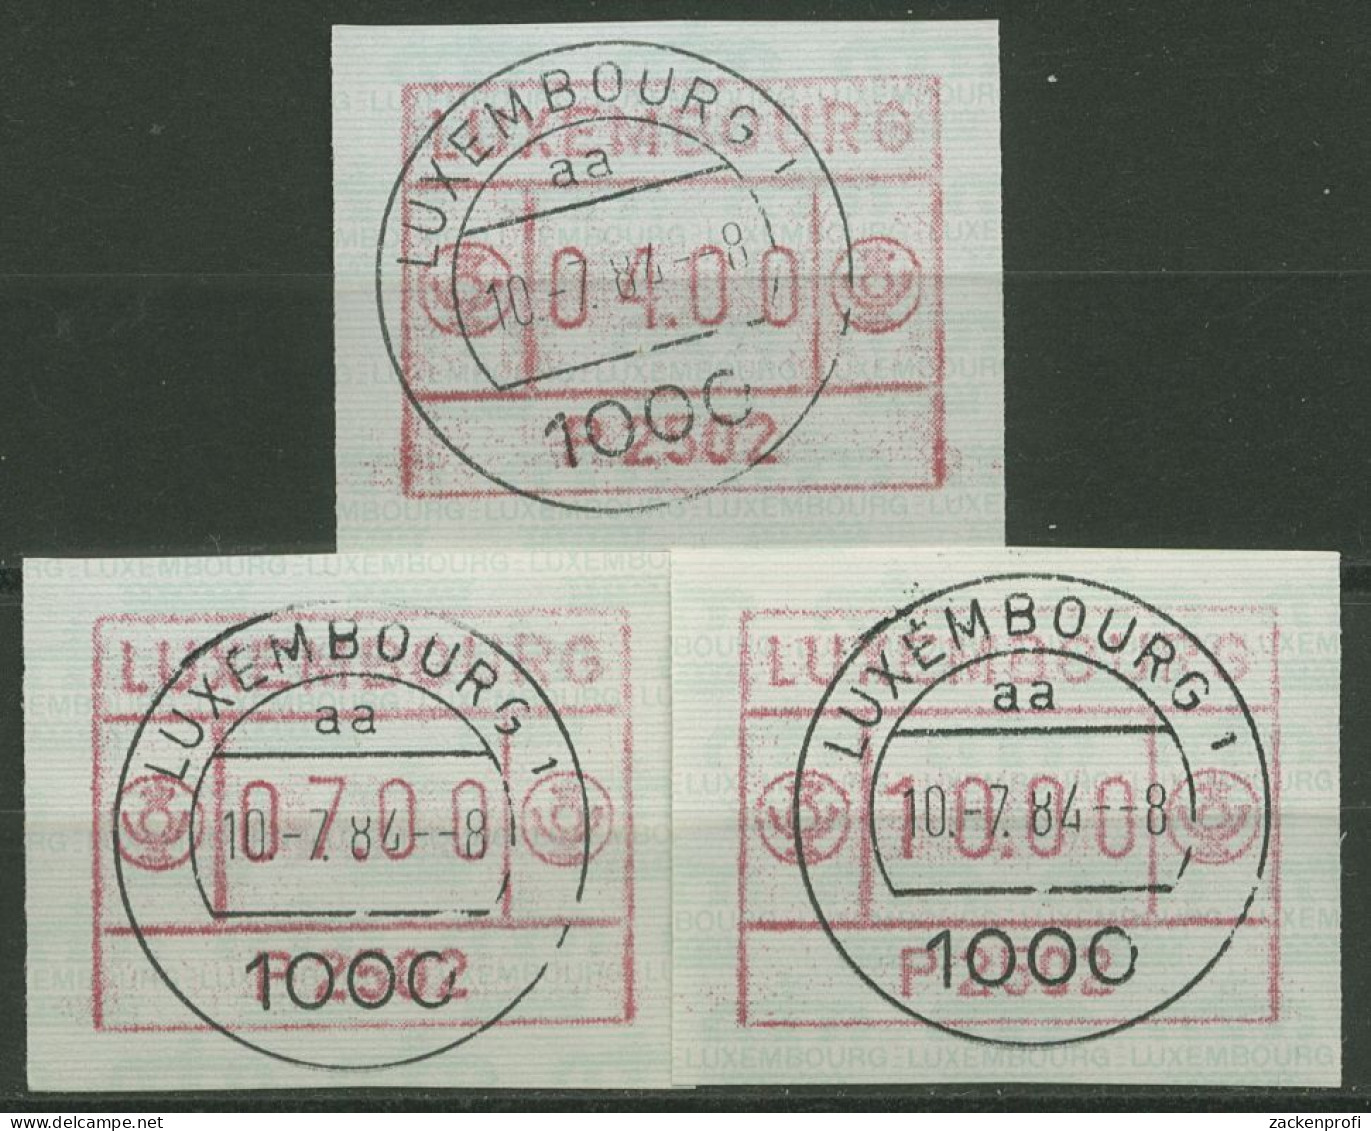 Luxemburg 1983 Automatenmarke Automat P 2502 Satz 1.2.1 B S1 Gestempelt - Postage Labels